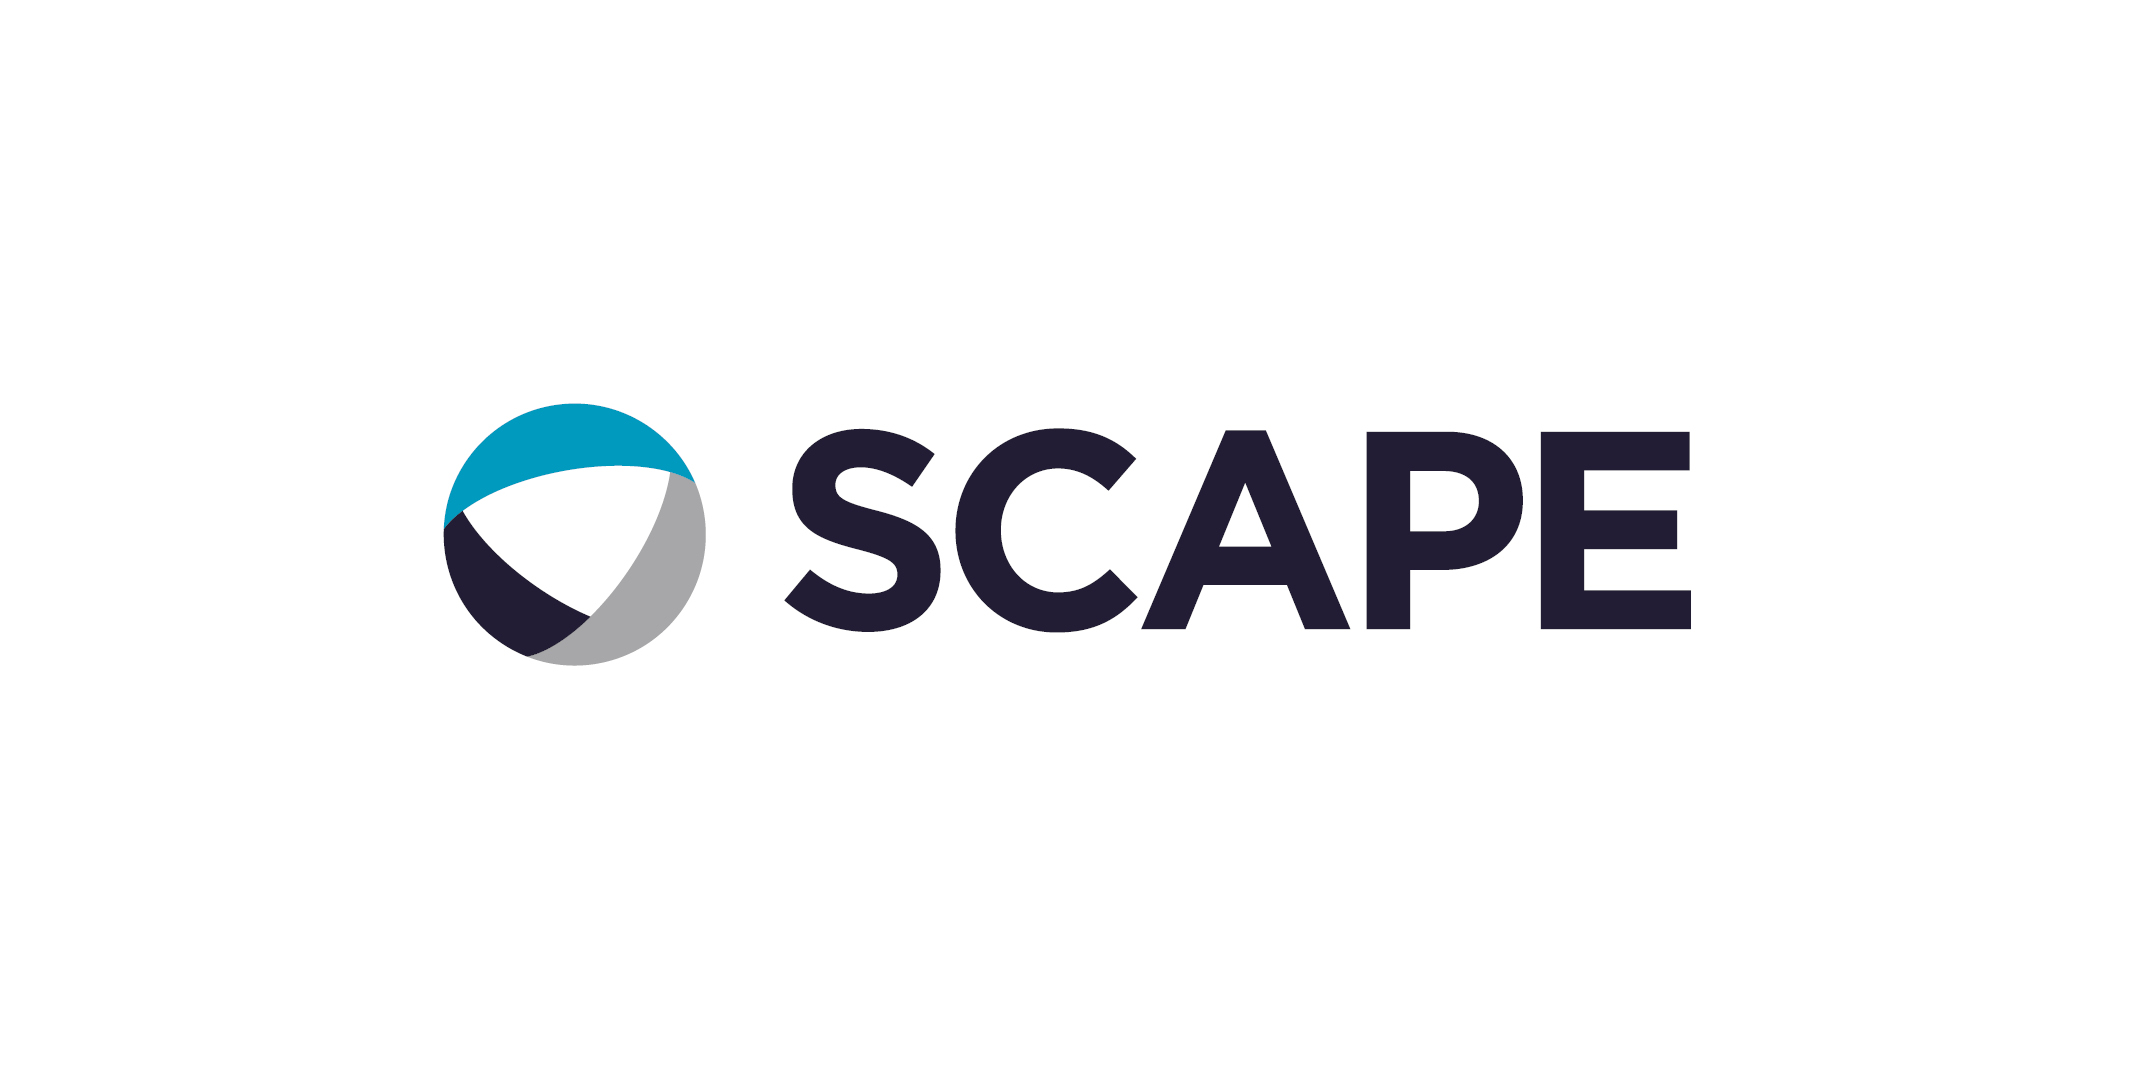 Scape logo2.jpg